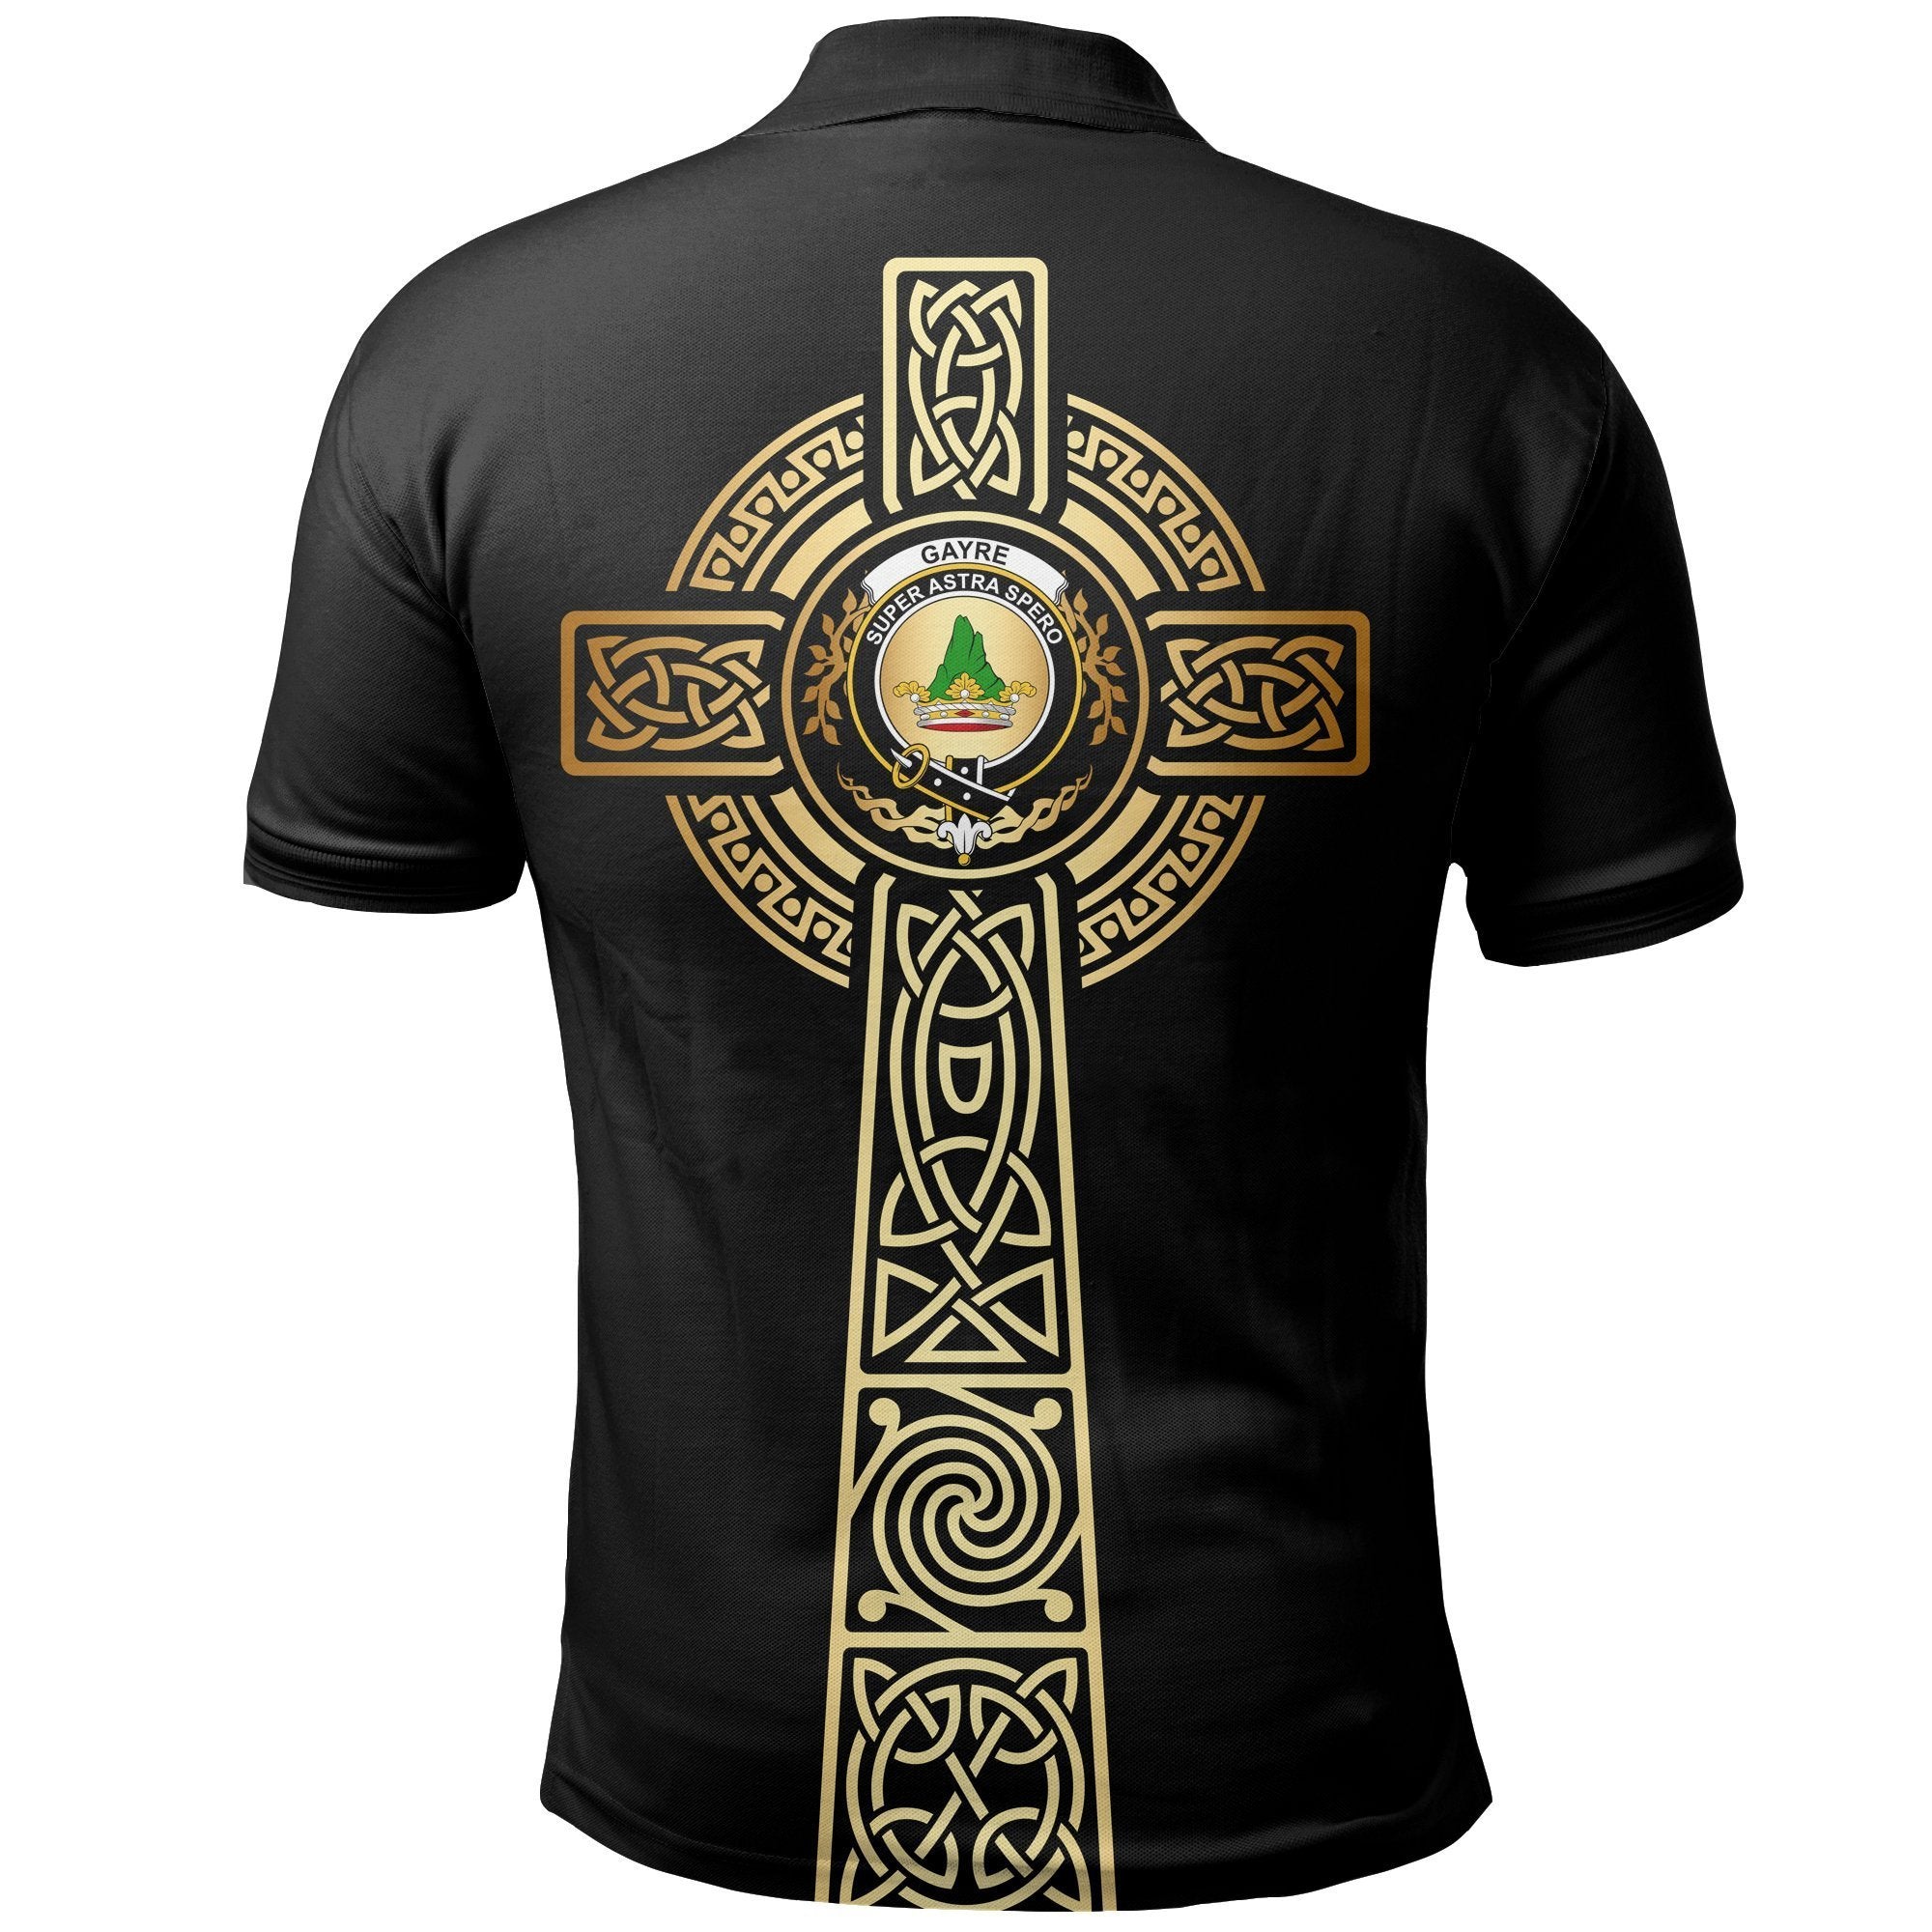 Gayre Clan Unisex Polo Shirt - Celtic Tree Of Life